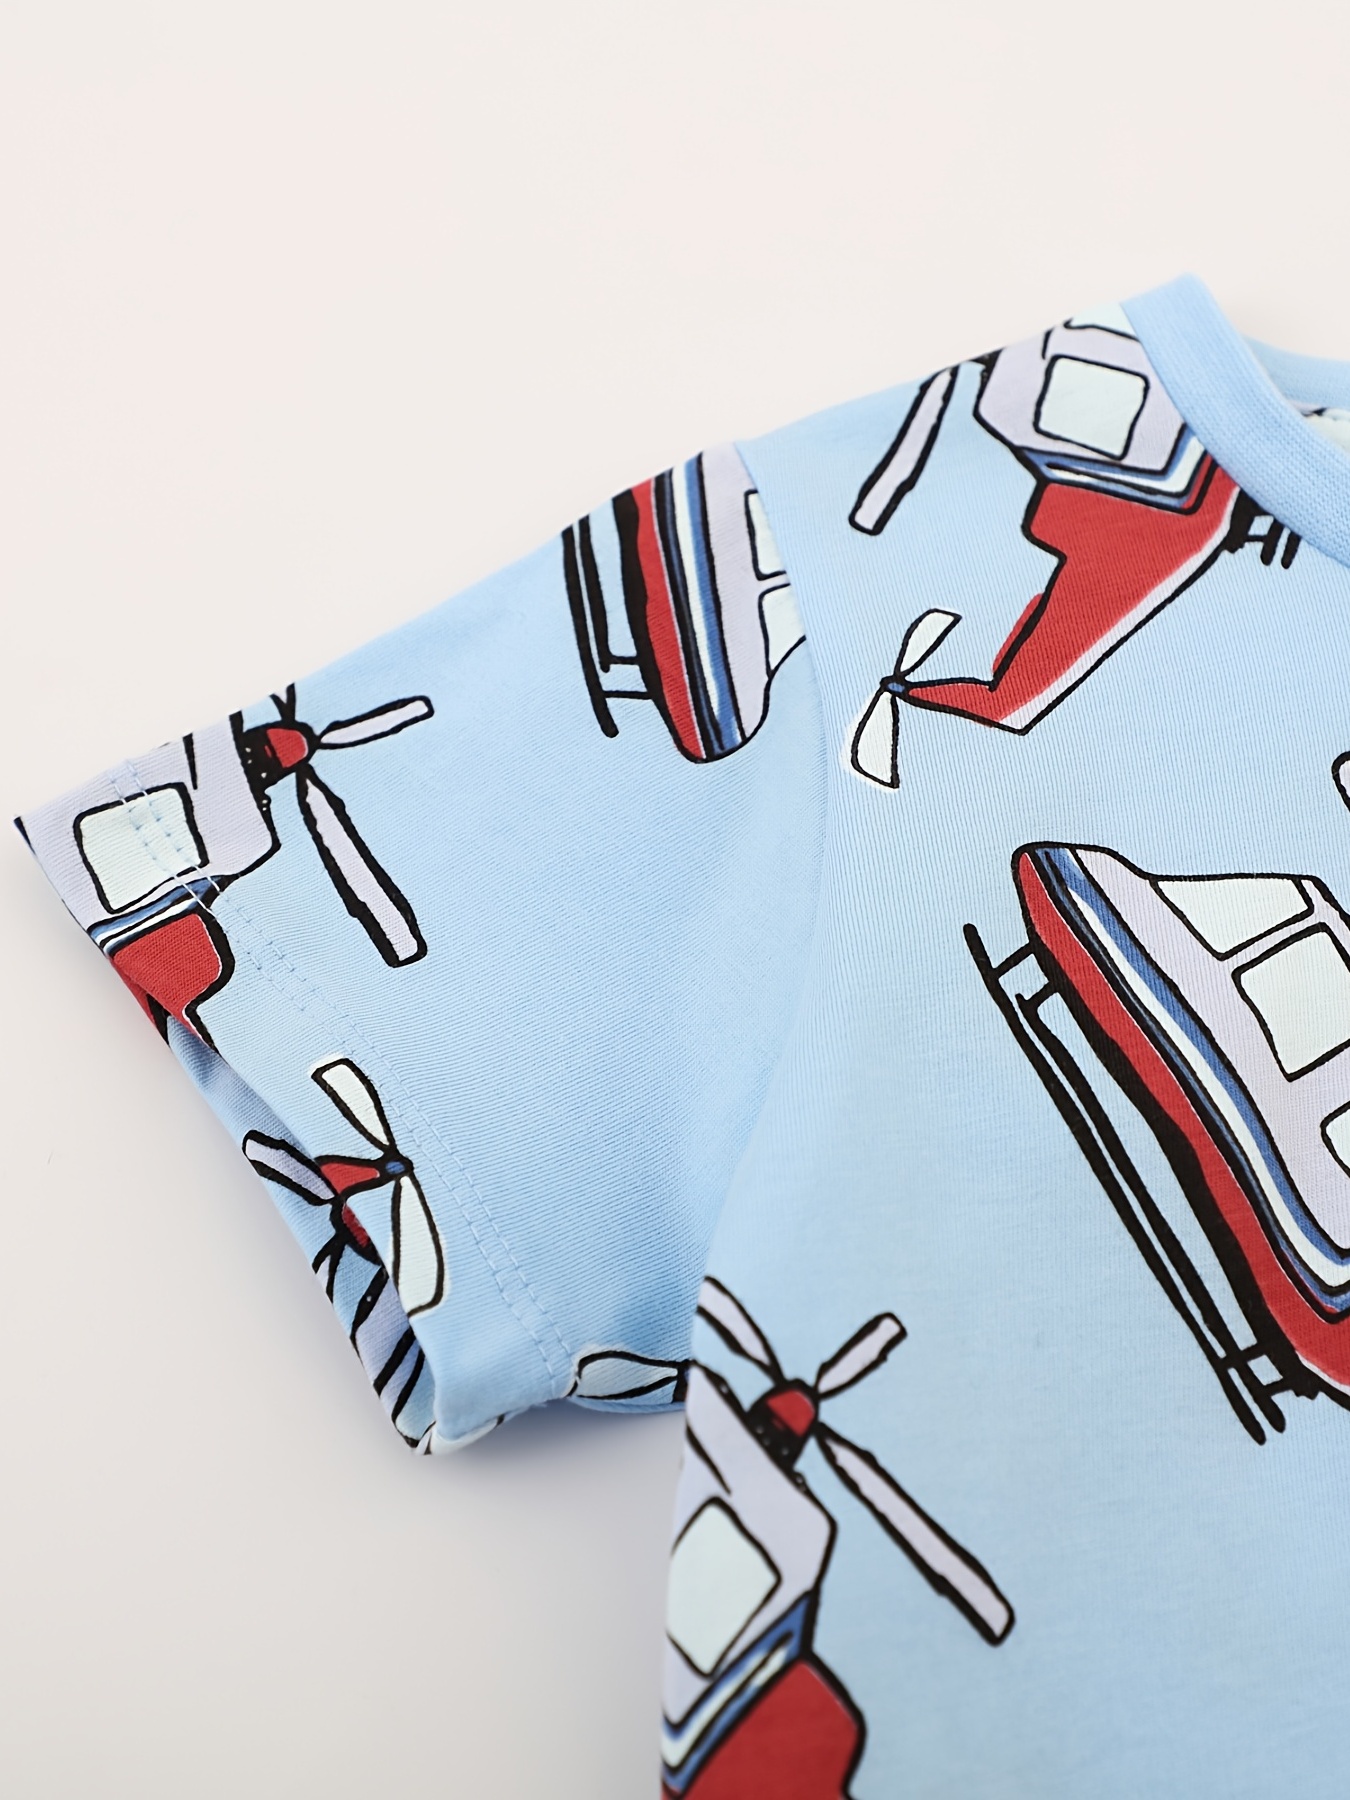 New Cartoon Planes Printed T Shirt For Boy Men Fashion Casual T